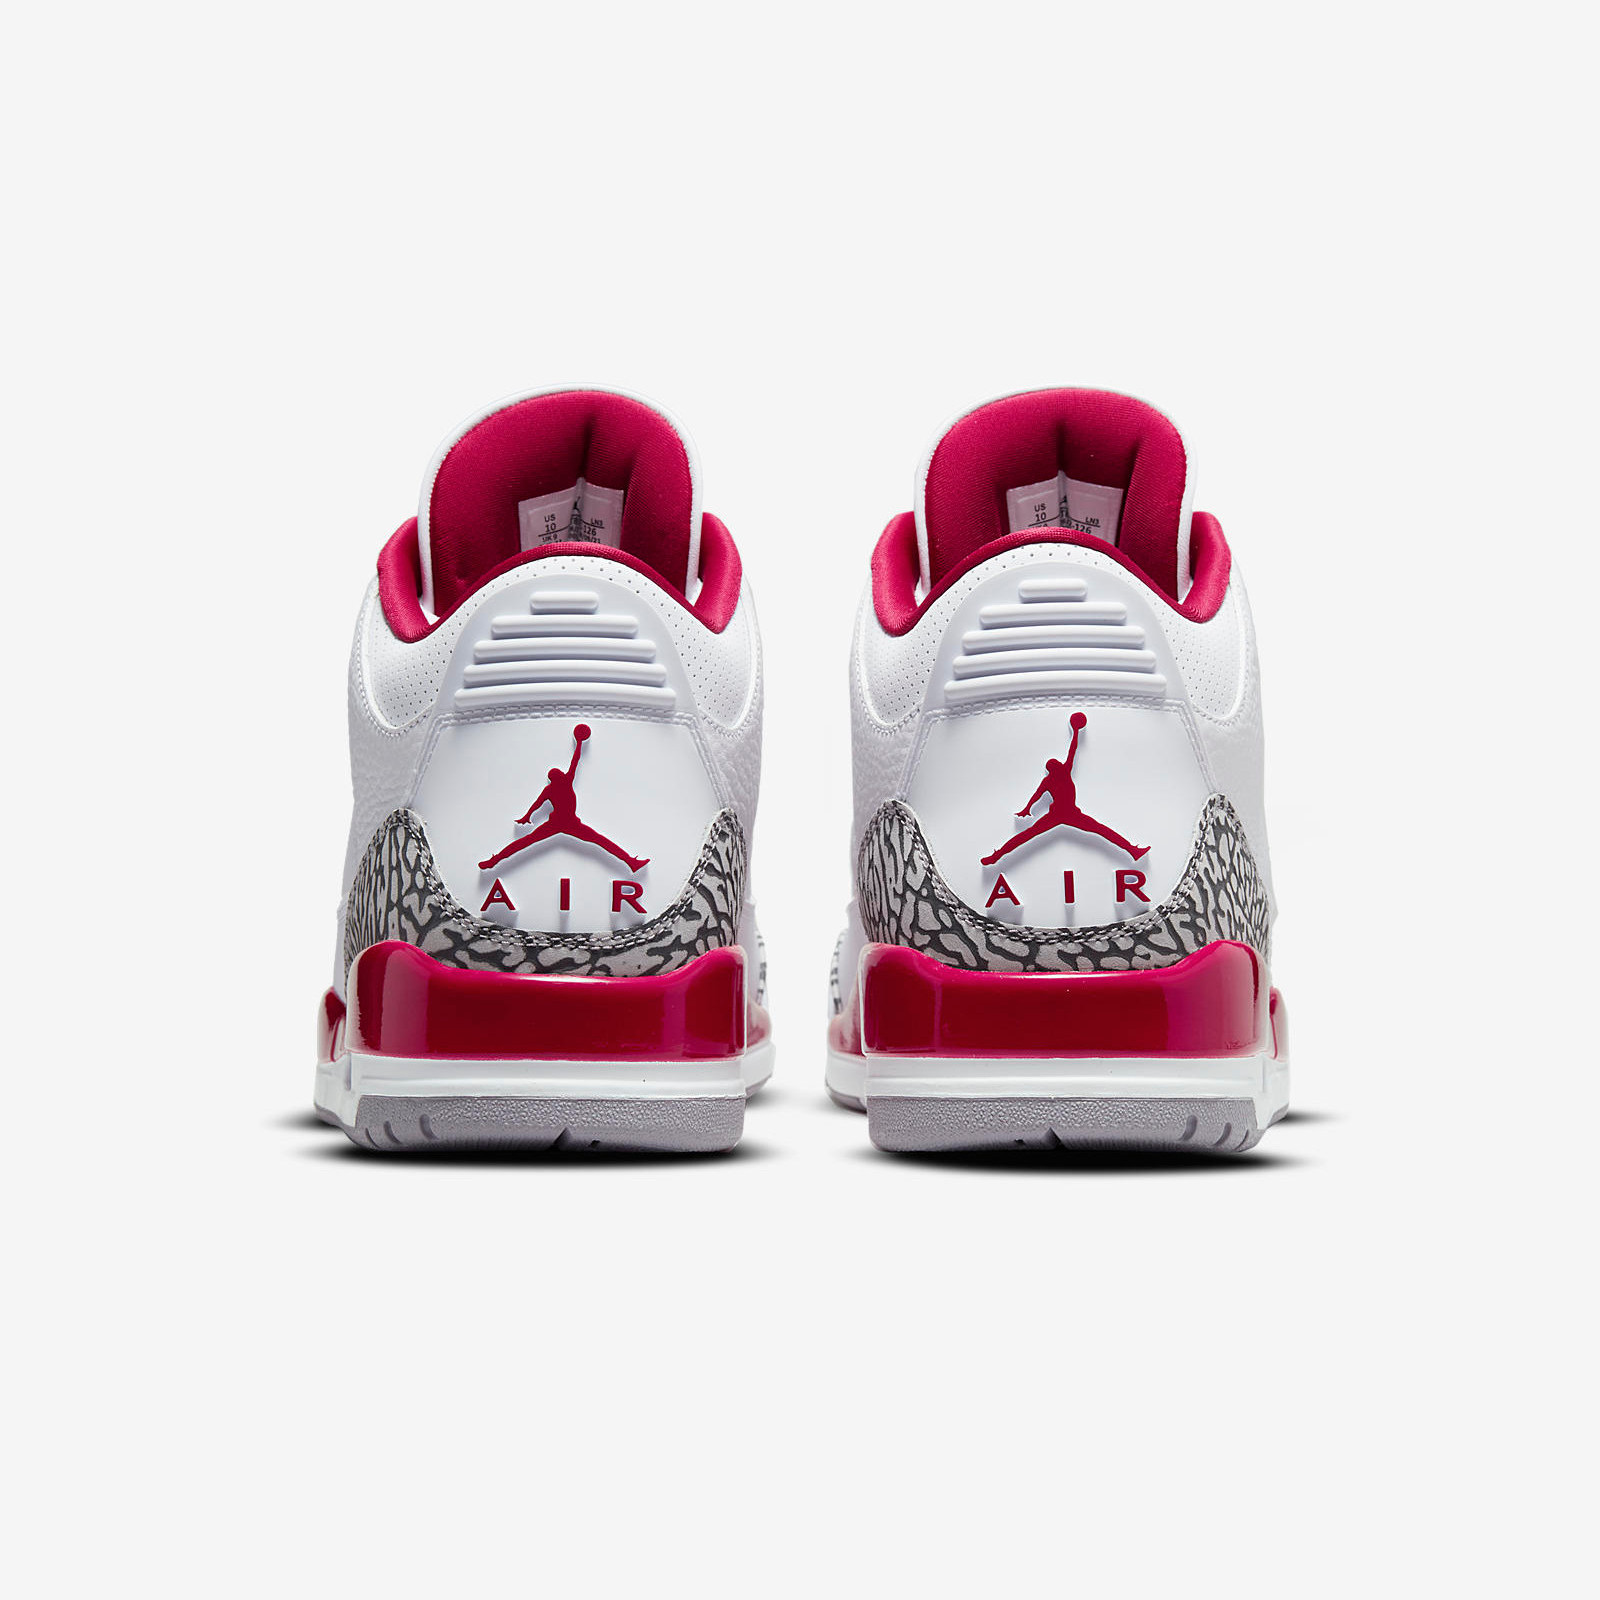 Air Jordan 3 Retro
« Cardinal Red »